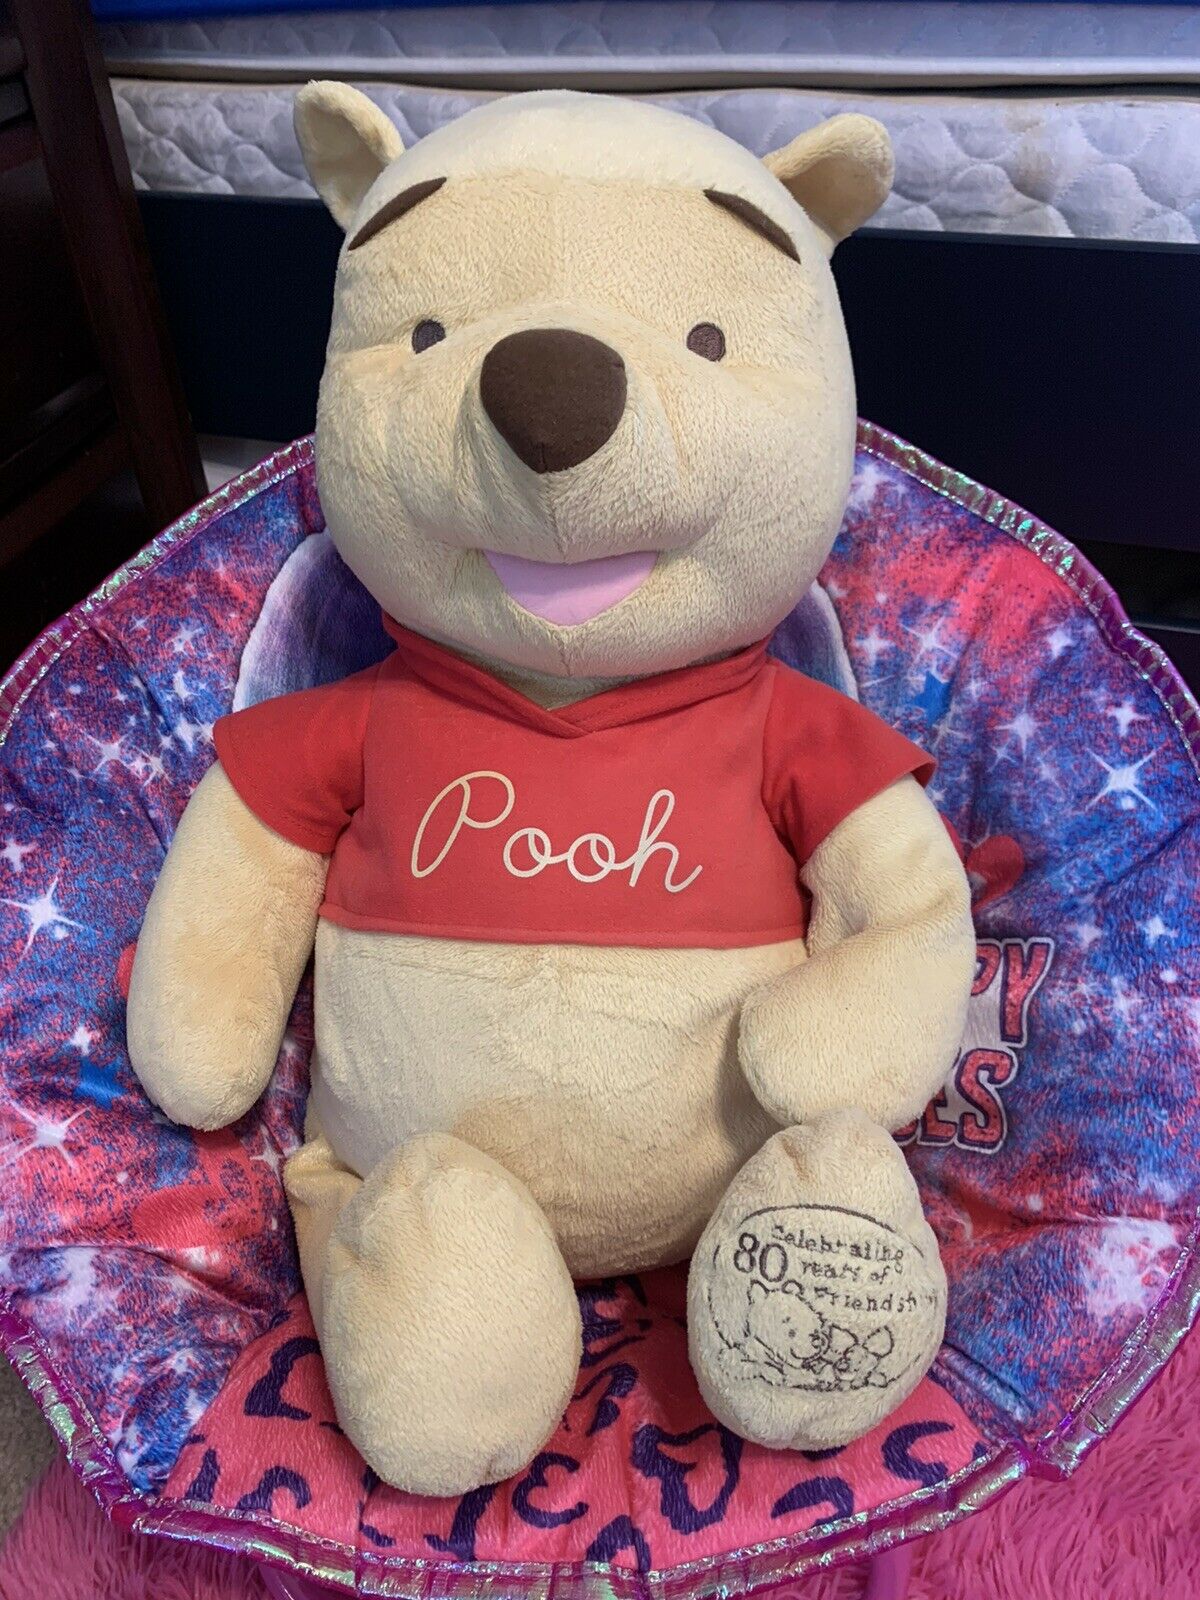 Fisher Price Winnie The Pooh Stuffed Plush Animal 24" Celebrating 80 Years 2005